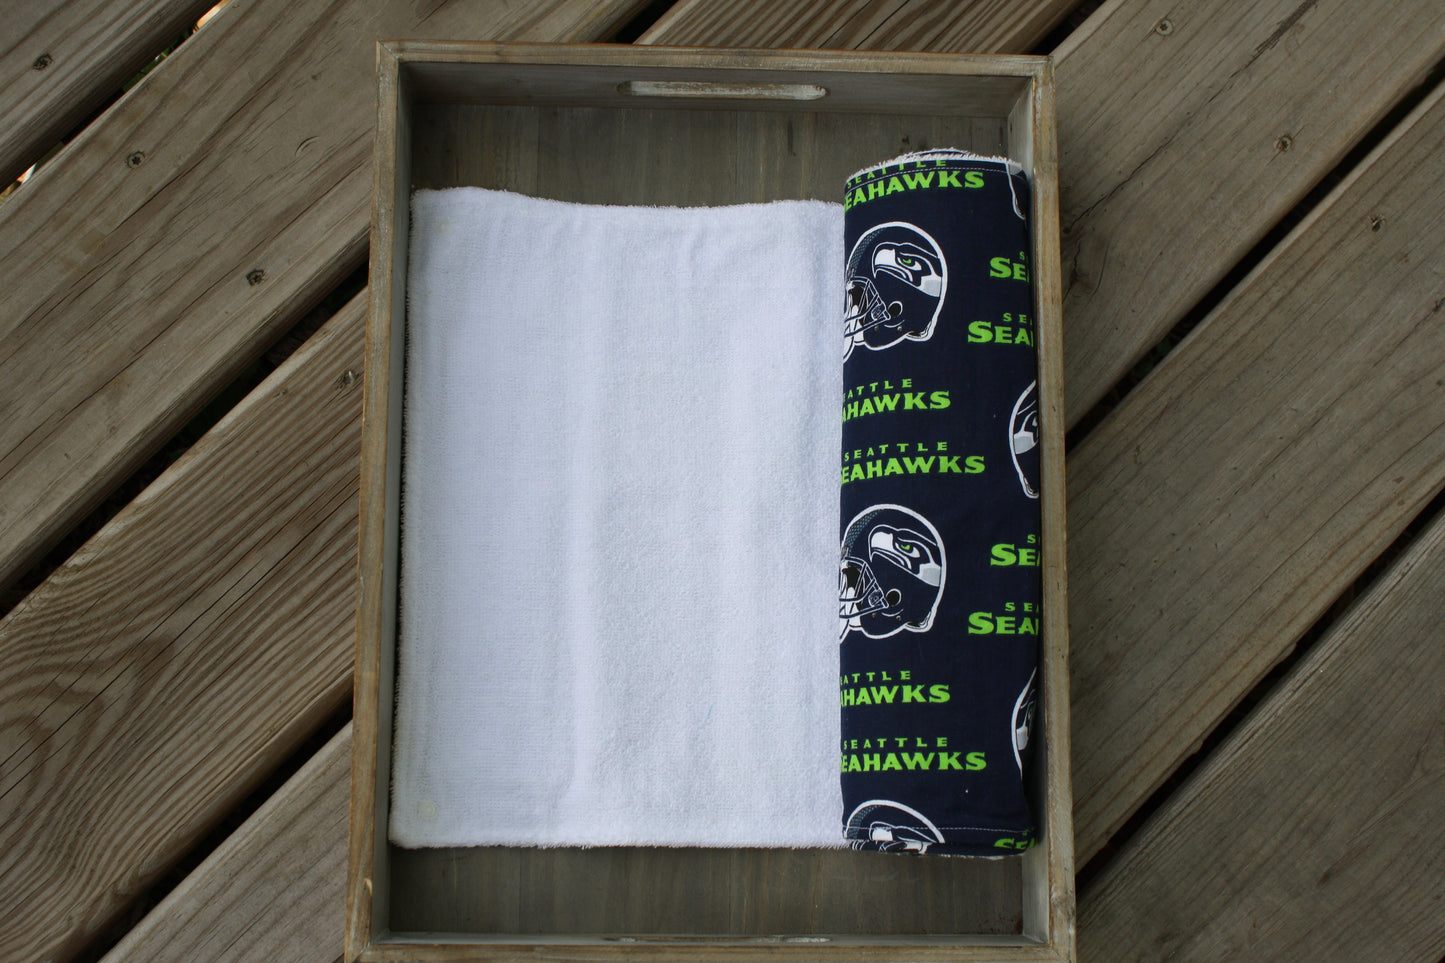 Seattle Seahawks snap together towel set